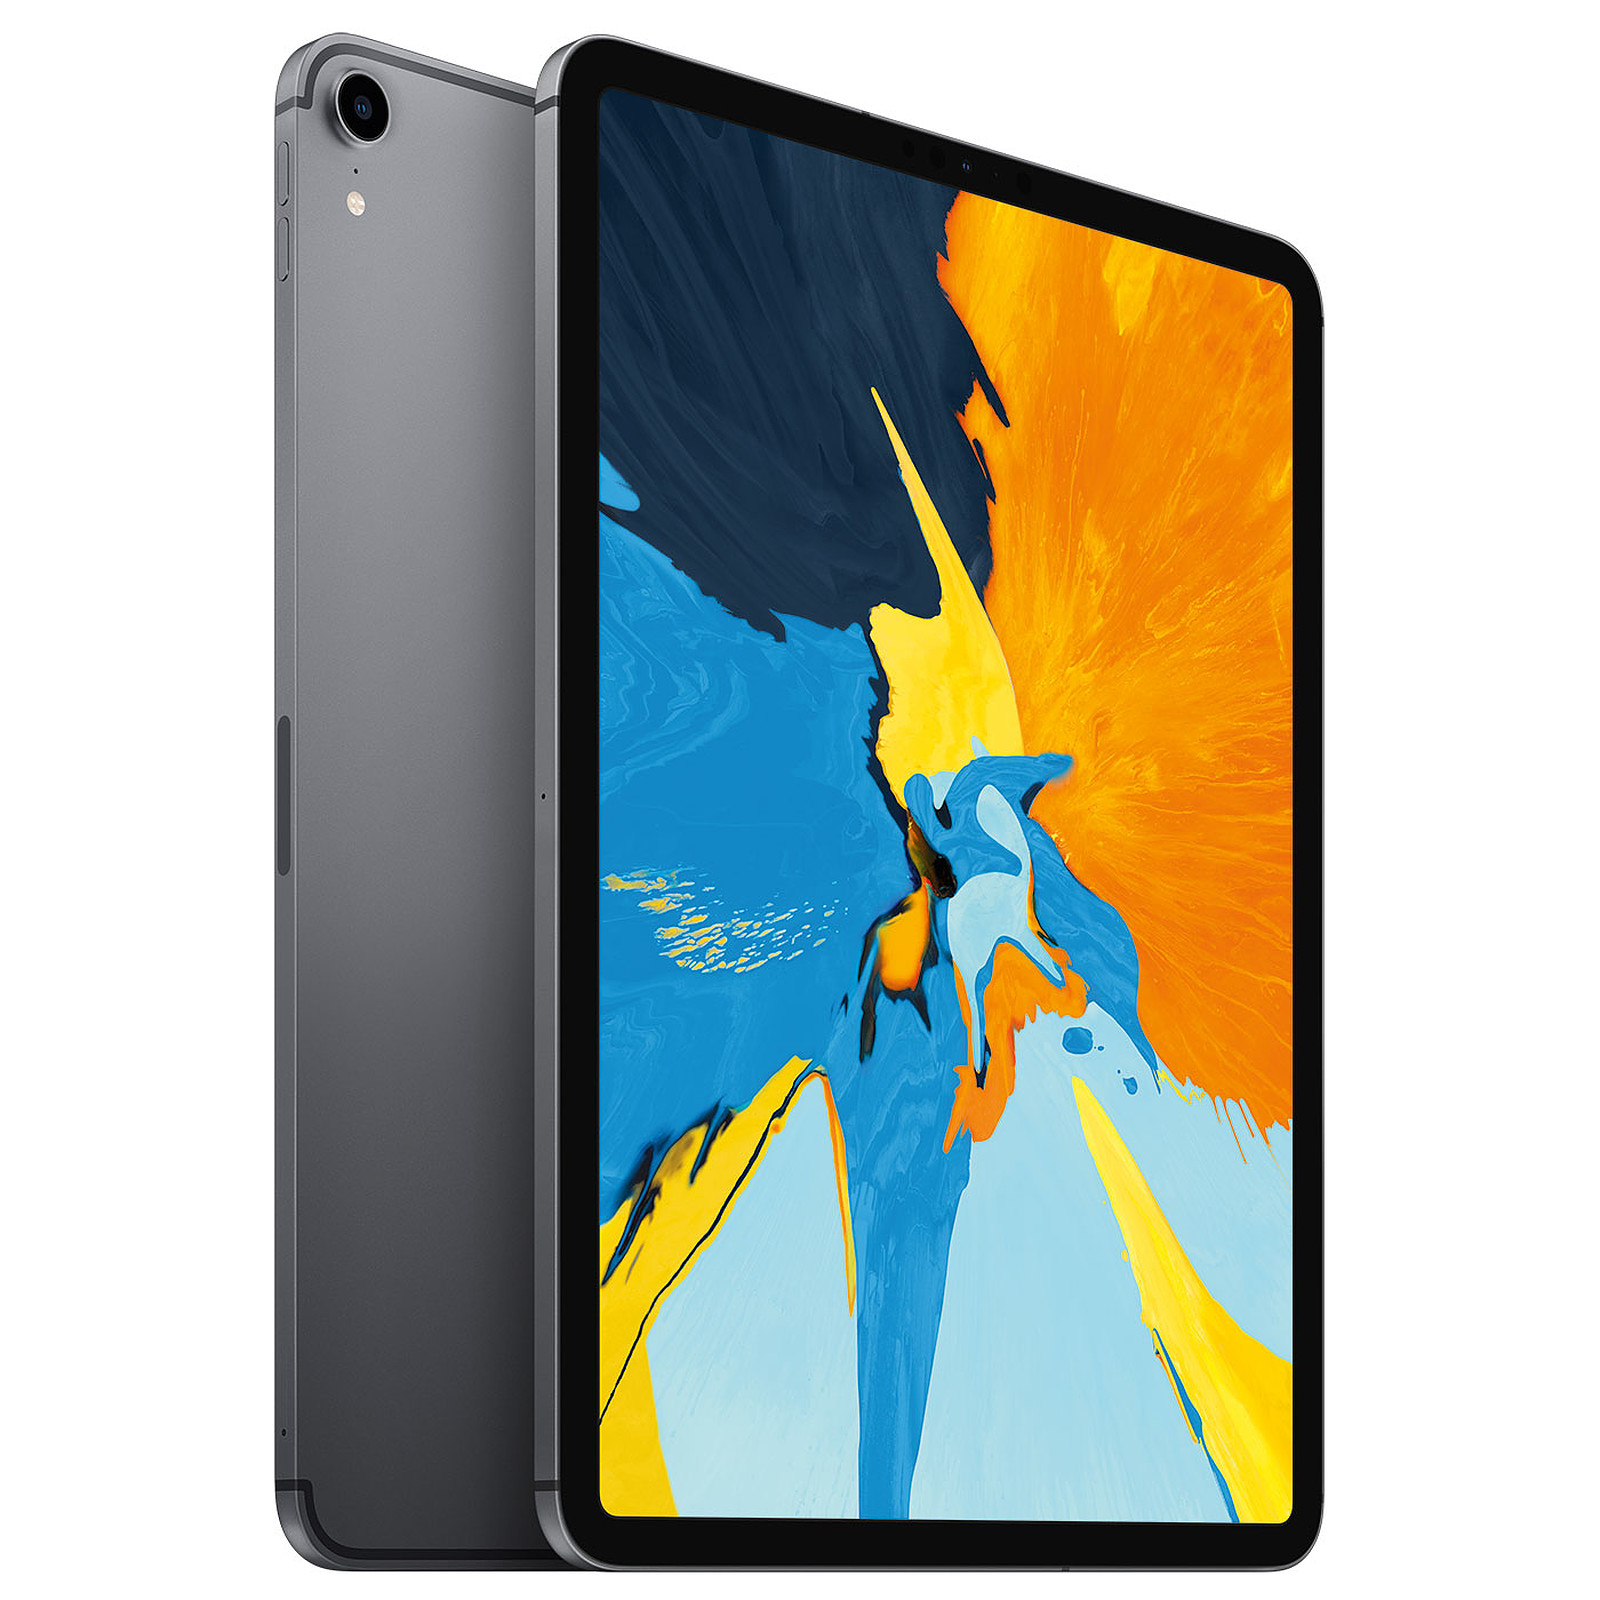 Apple iPad Pro (2018) 11 pouces 256 Go Wi-Fi + Cellular Gris Sideral · Reconditionne - Tablette tactile Apple